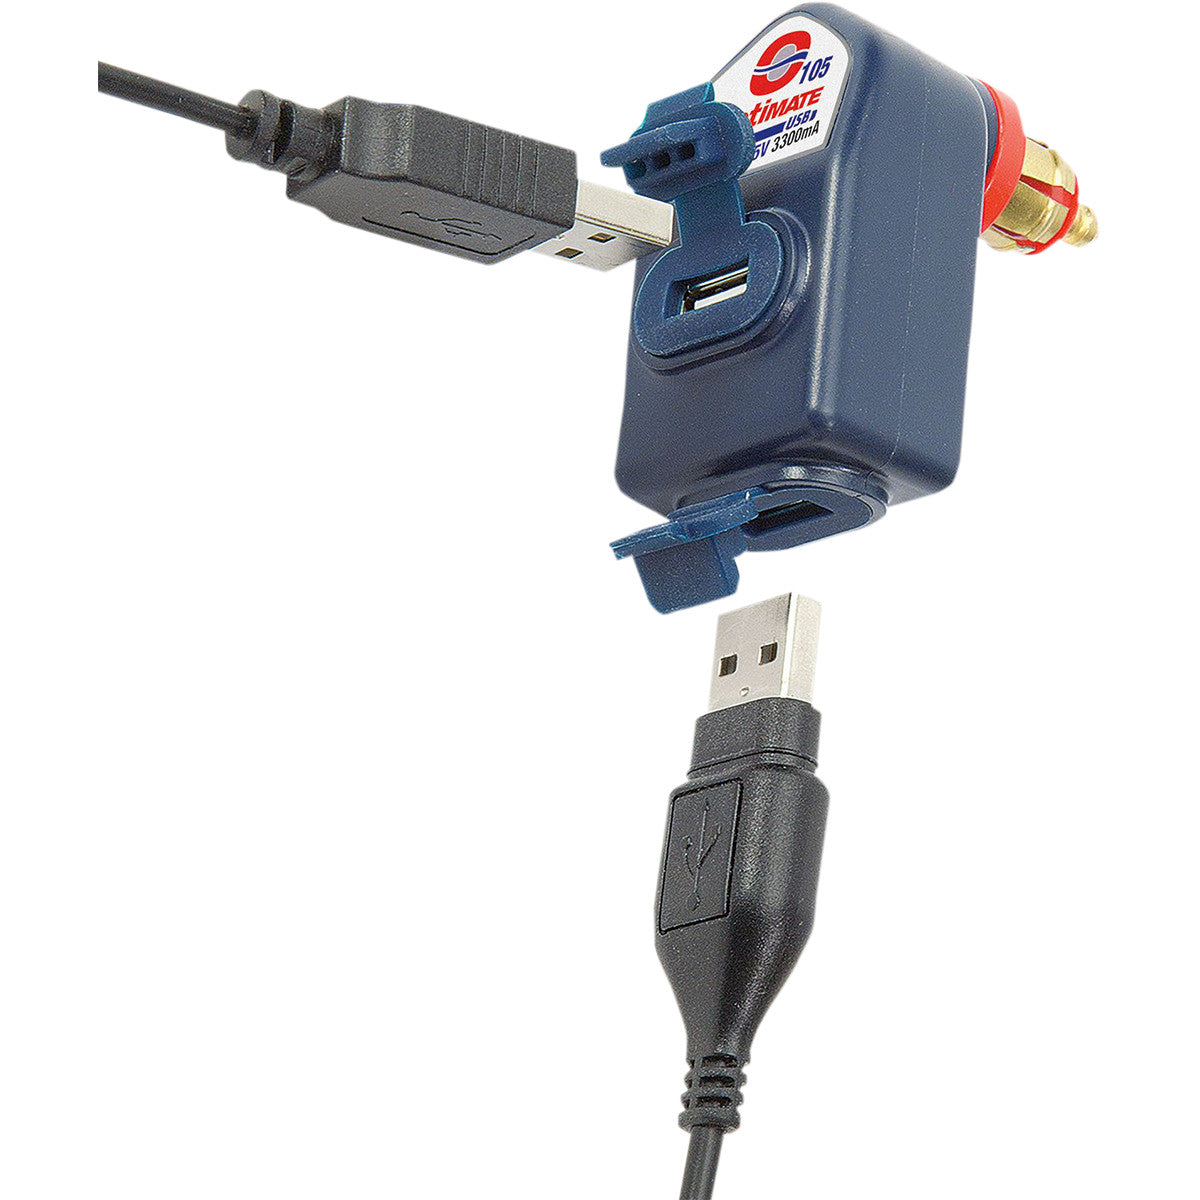 OPTIMATE USB O-105 SMART 3300mA DUAL OUTPUT USB CHARGER, WITH BIKE PLUG